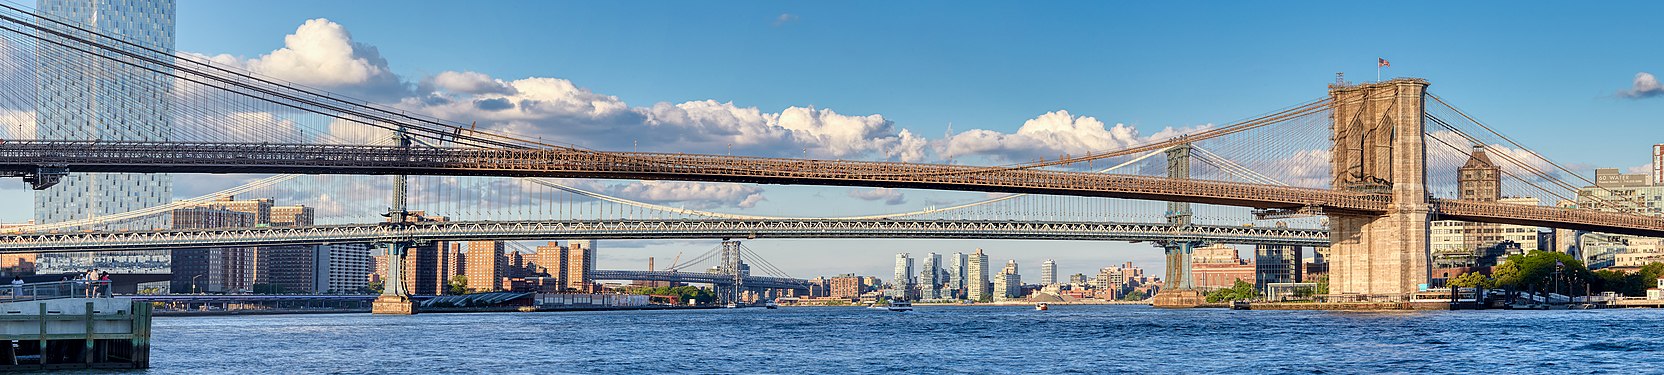 Brooklyn Bridge, Manhattan Bridge, Williamsburg Bridge, and a "cloud bridge" before sunset.